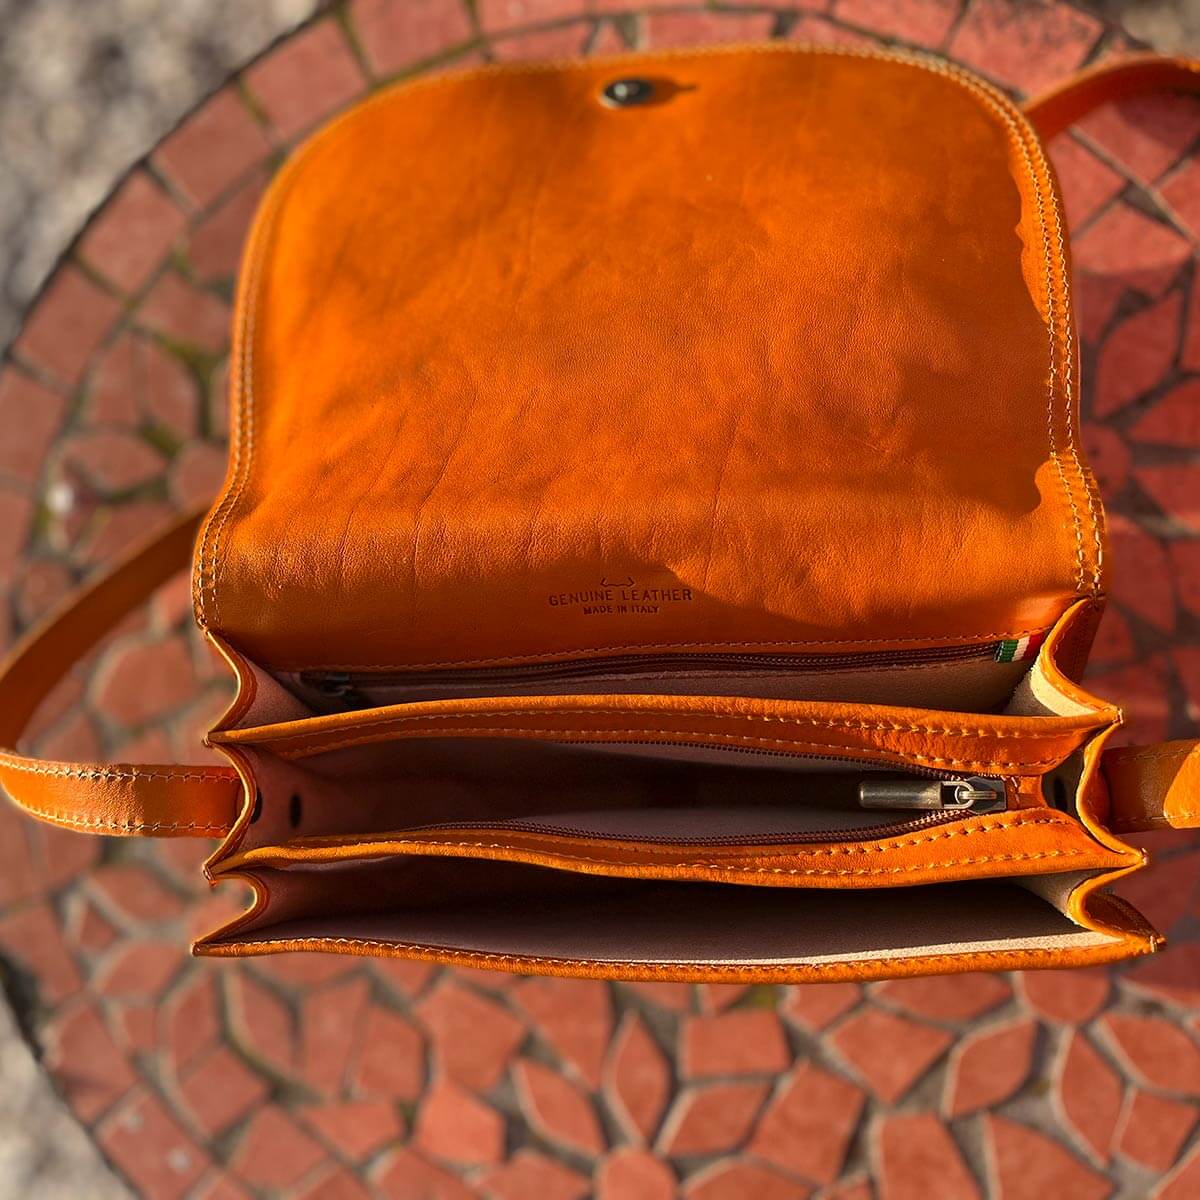 VALENTINA Genuine Leather Hobo Bag | eBay